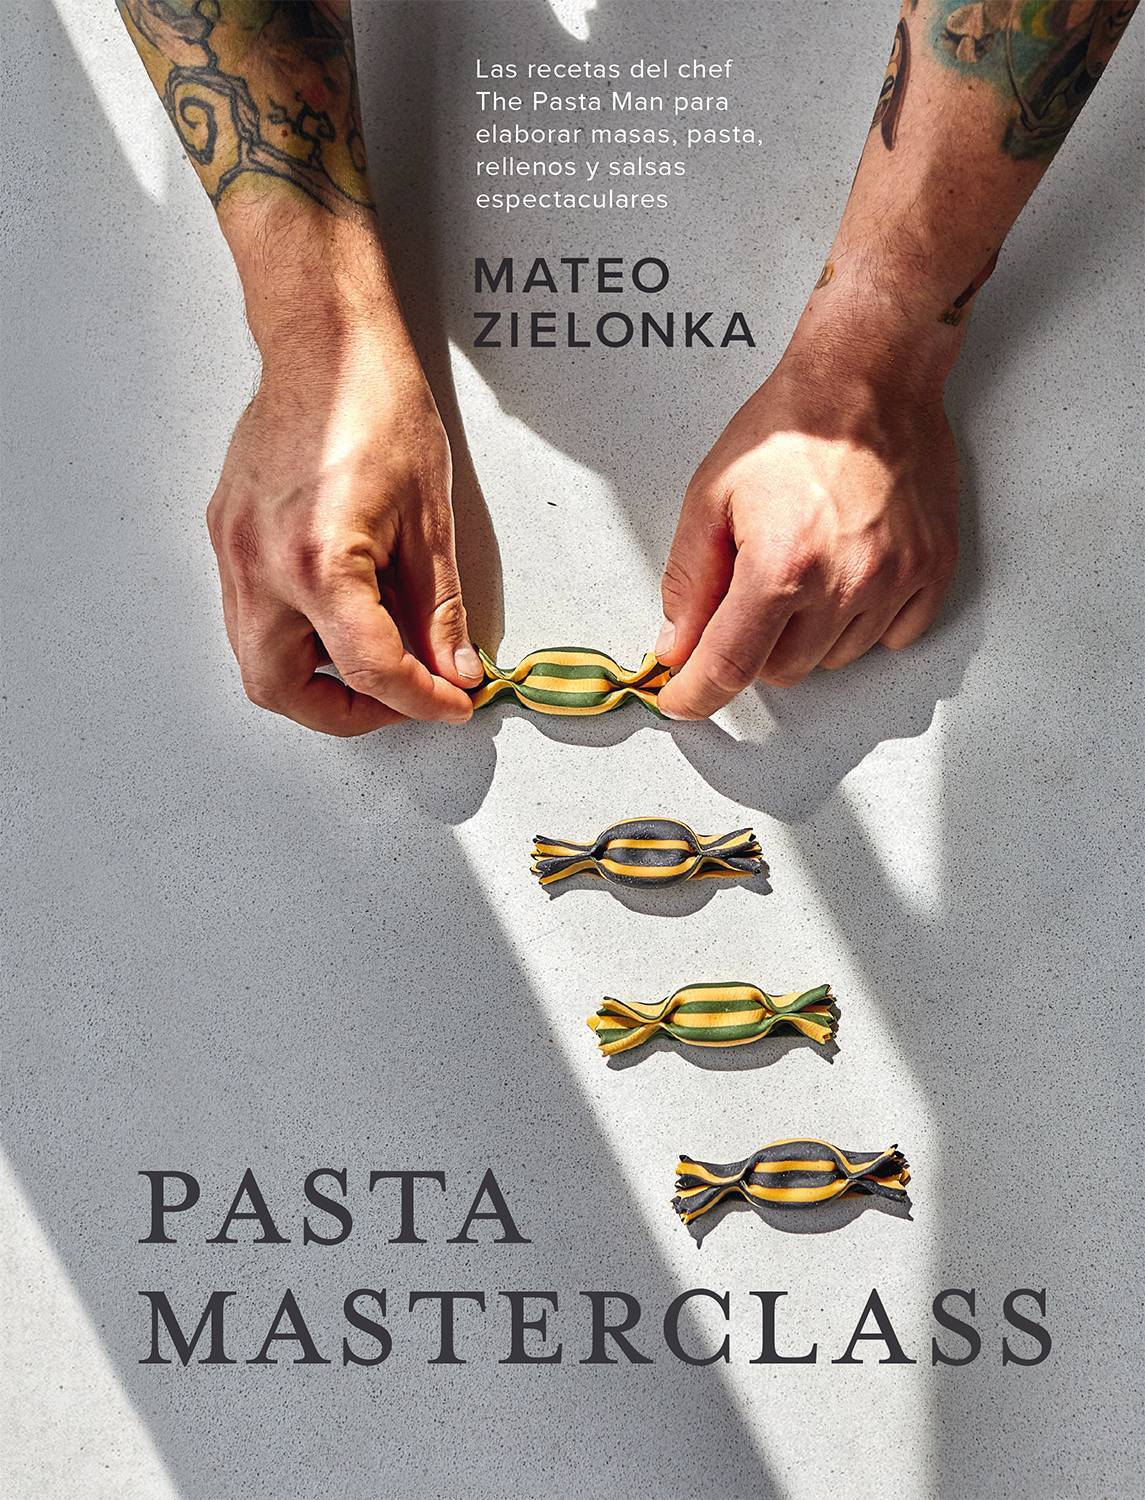 Pasta Masterclass